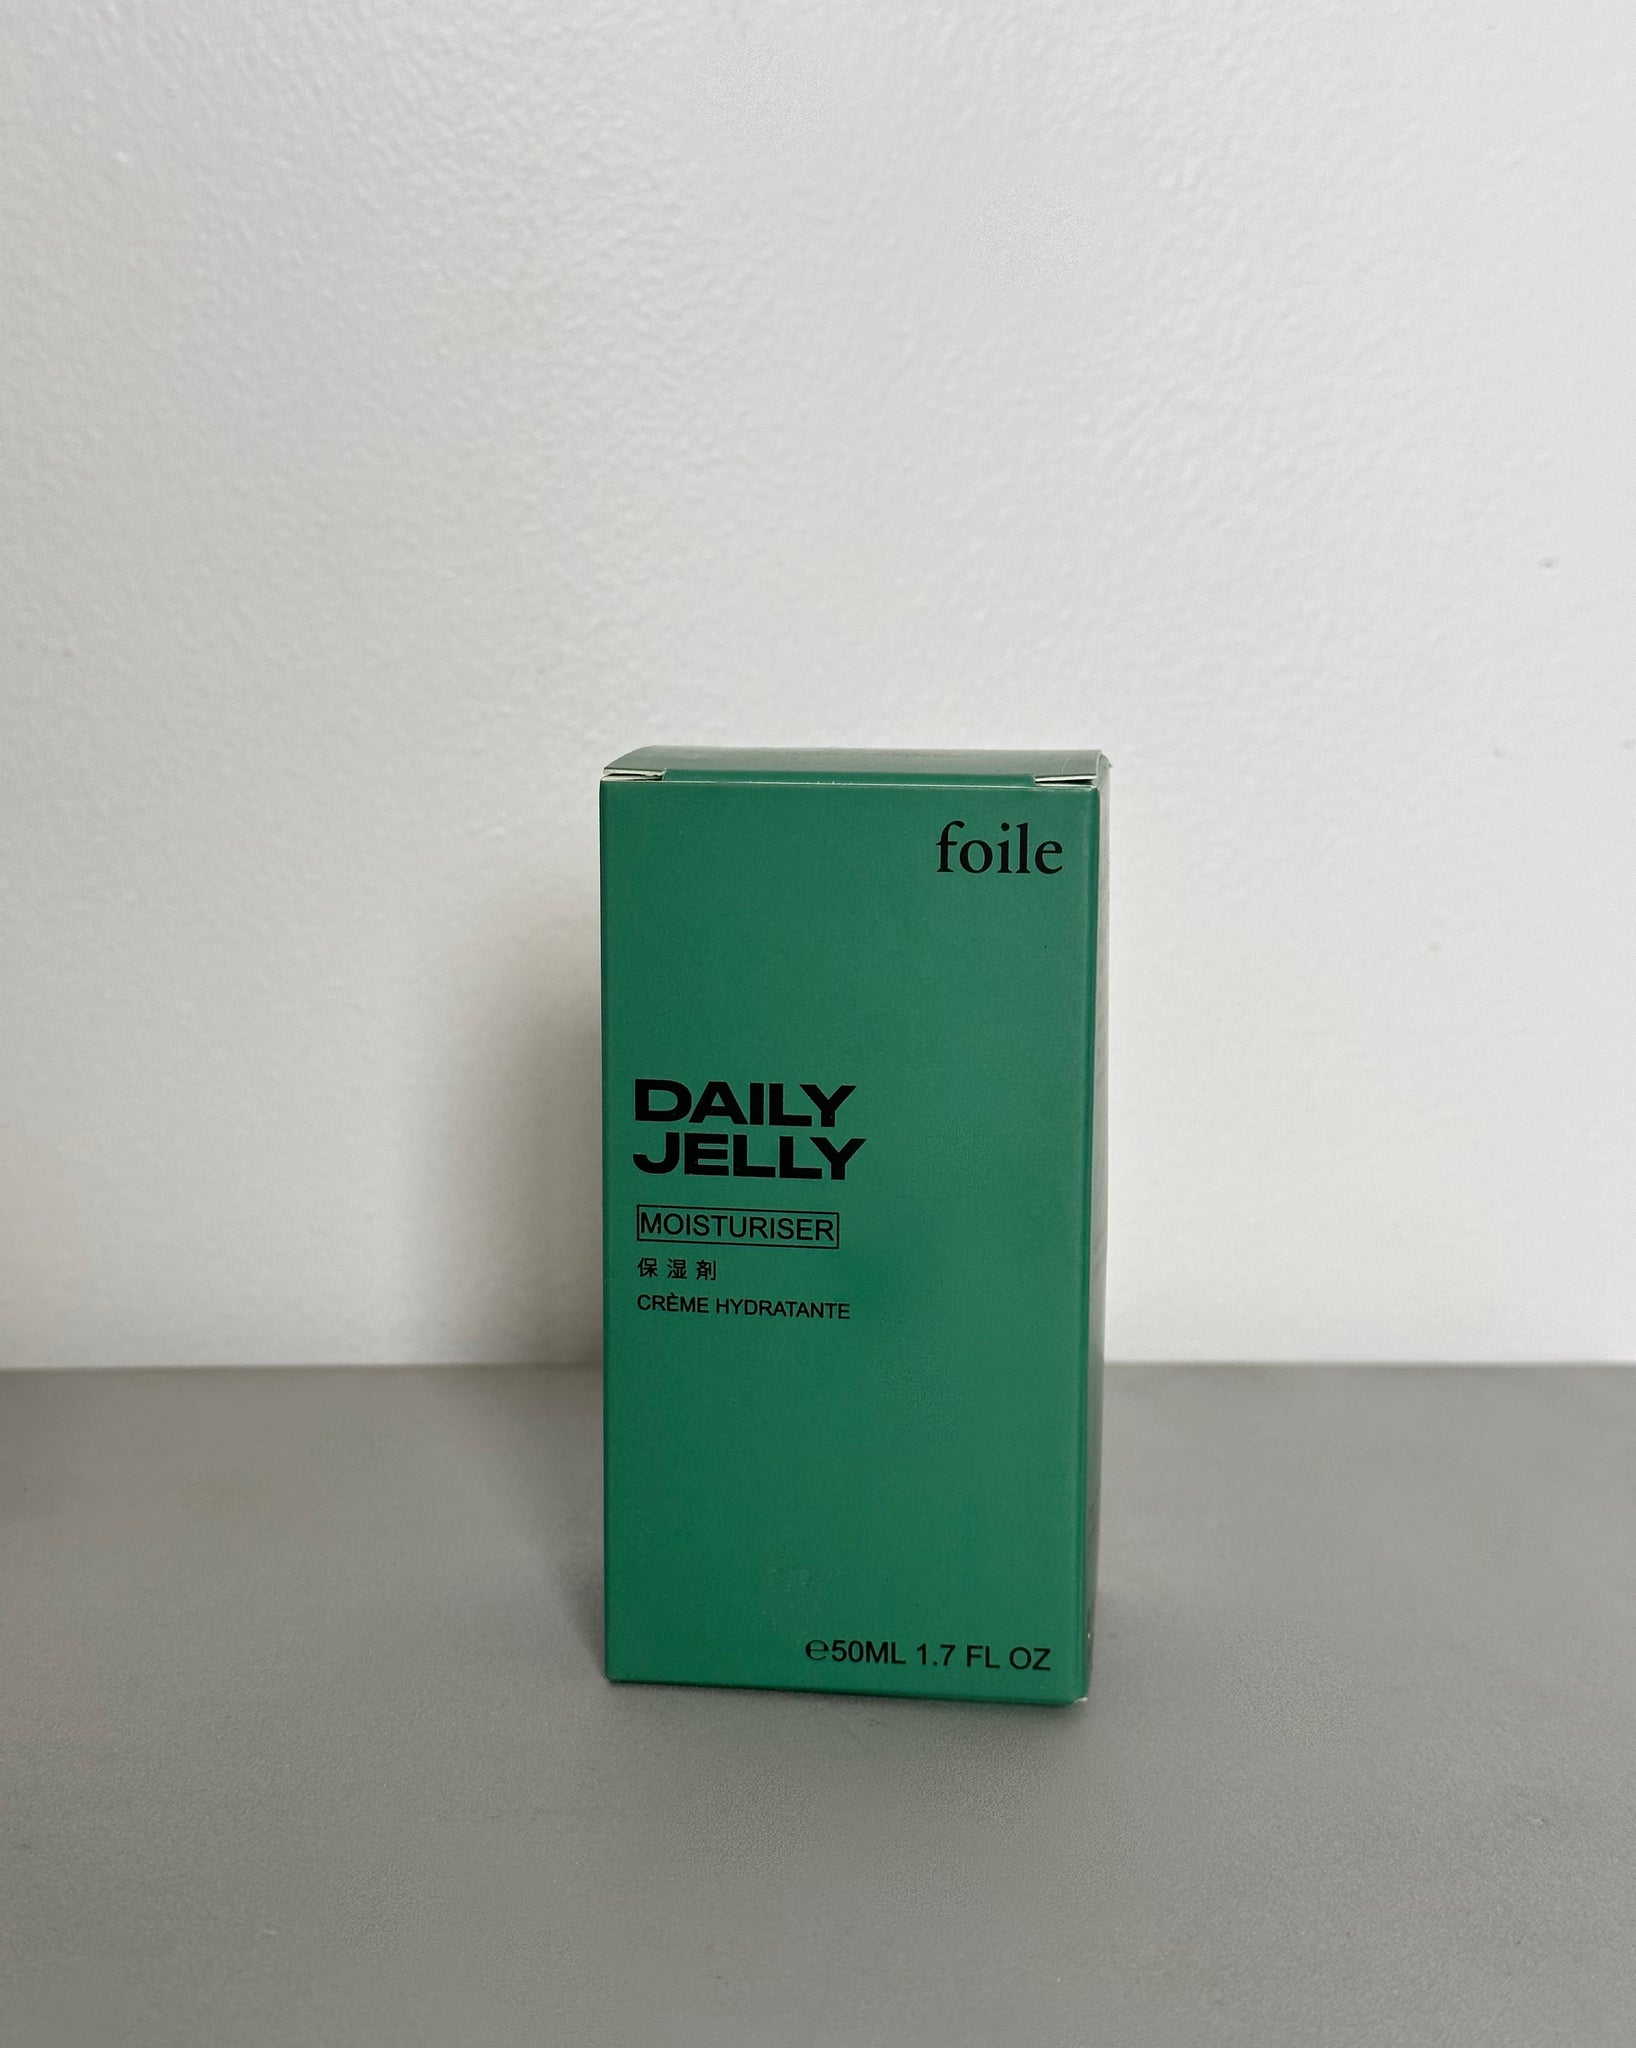 Daily Jelly Moisturiser - That Looks